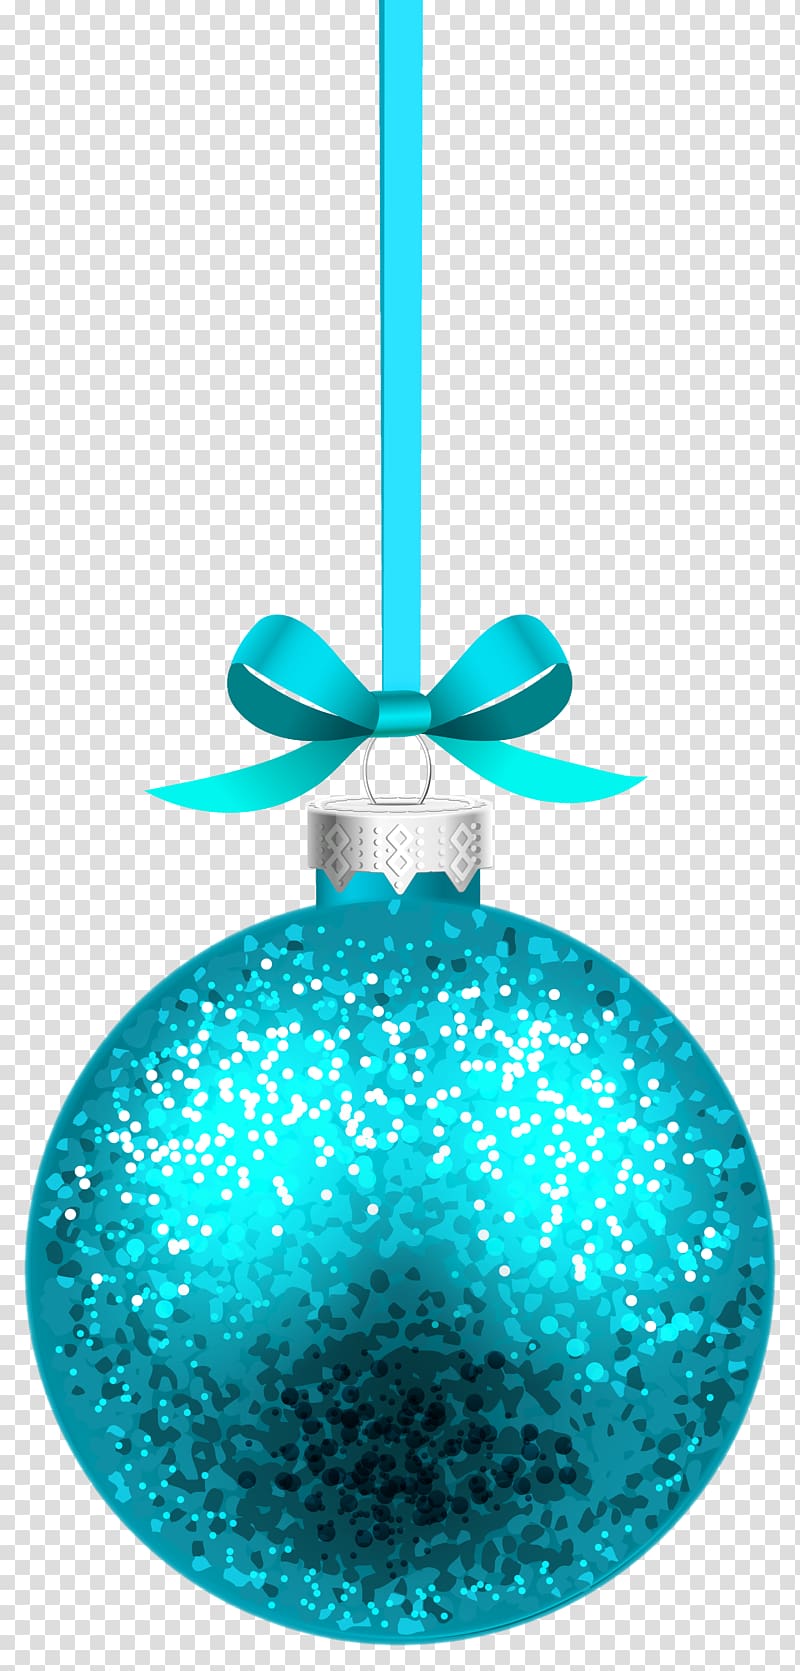 Bauble illustration christmas blue. Ornament clipart teal